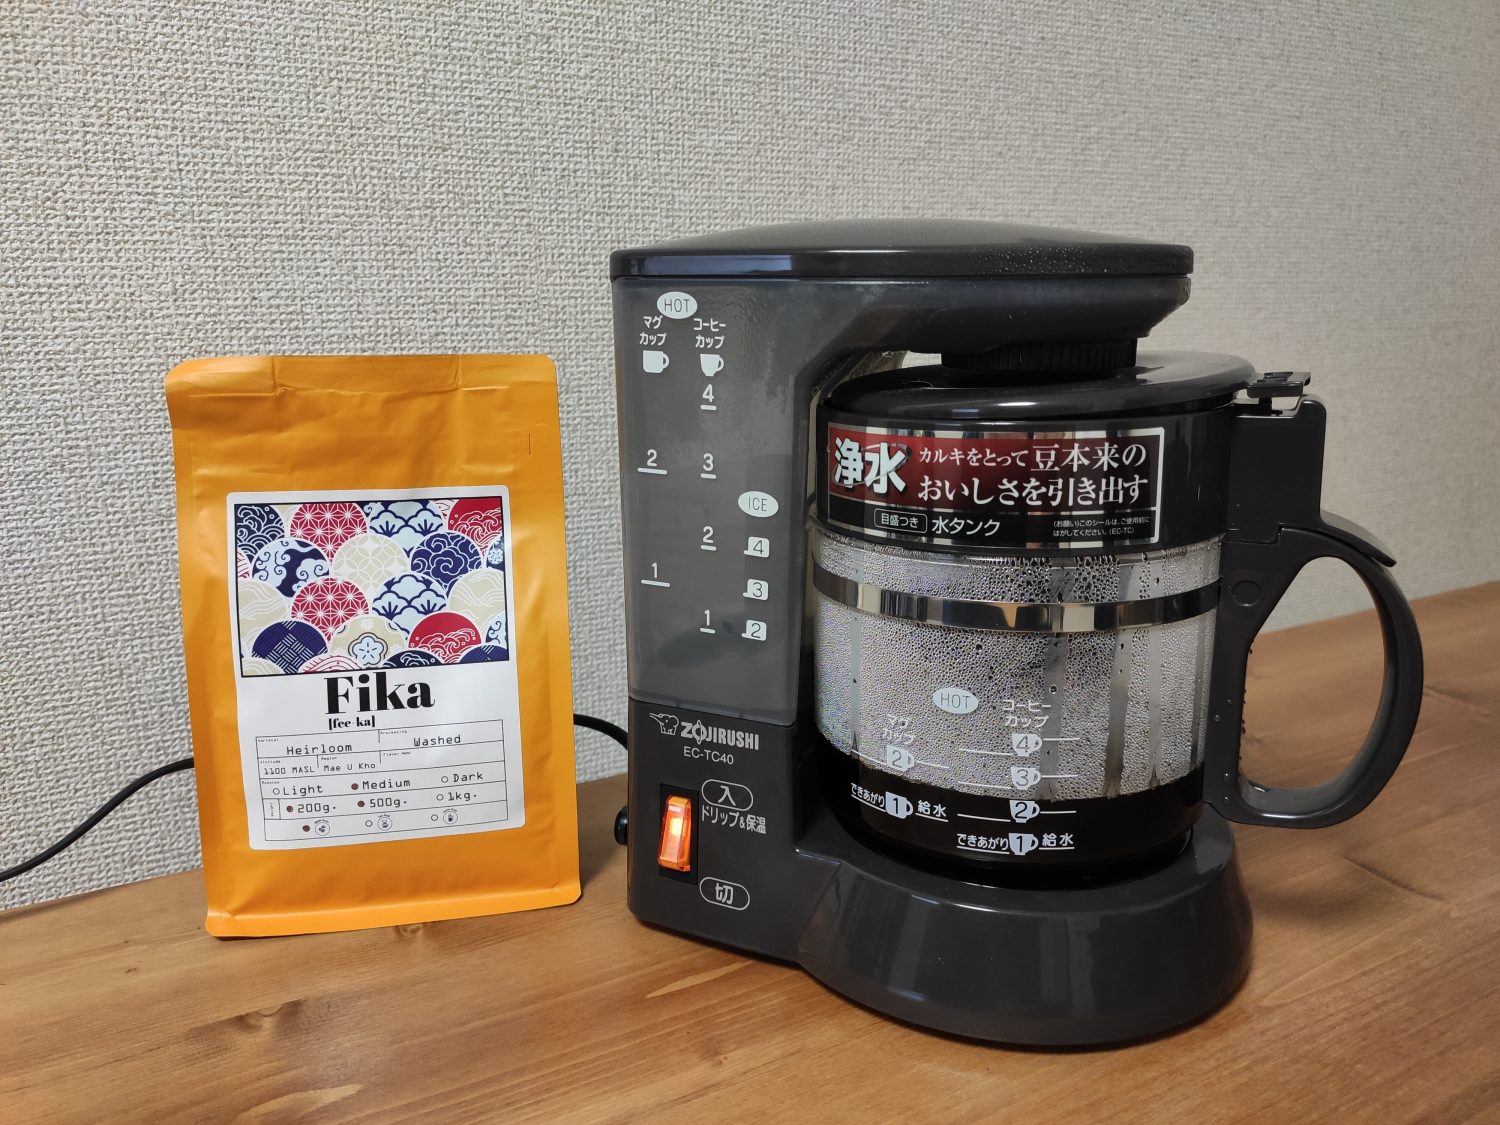 bag-of-coffee-and-drip-machine